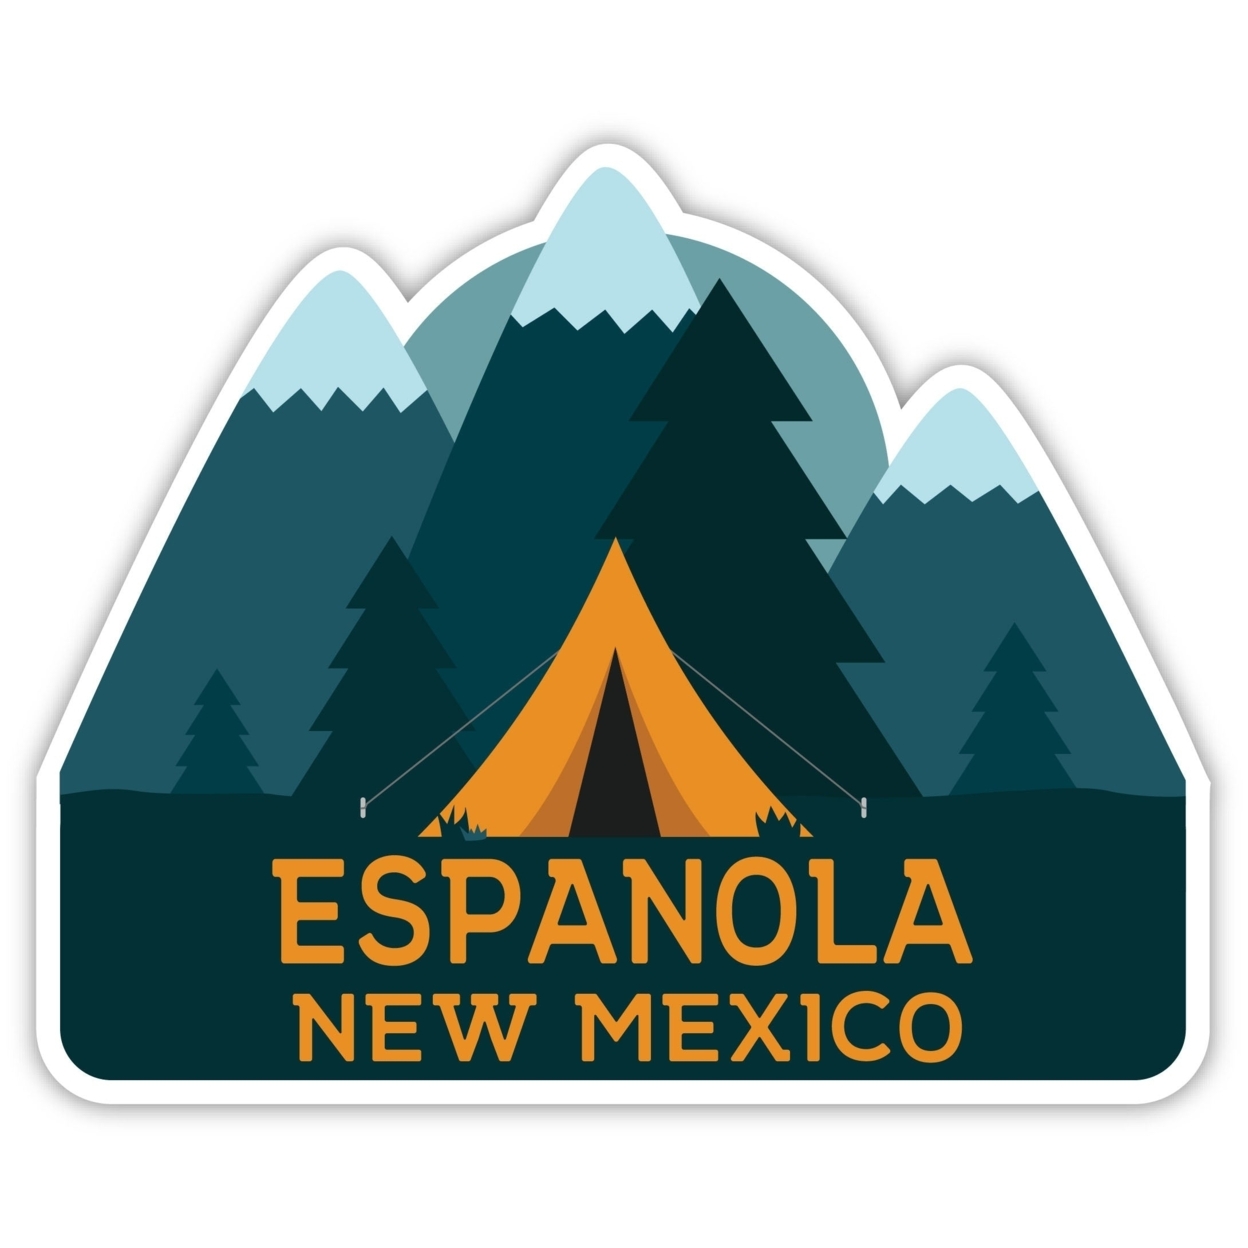 Espanola New Mexico Souvenir Decorative Stickers (Choose Theme And Size) - 4-Pack, 2-Inch, Tent